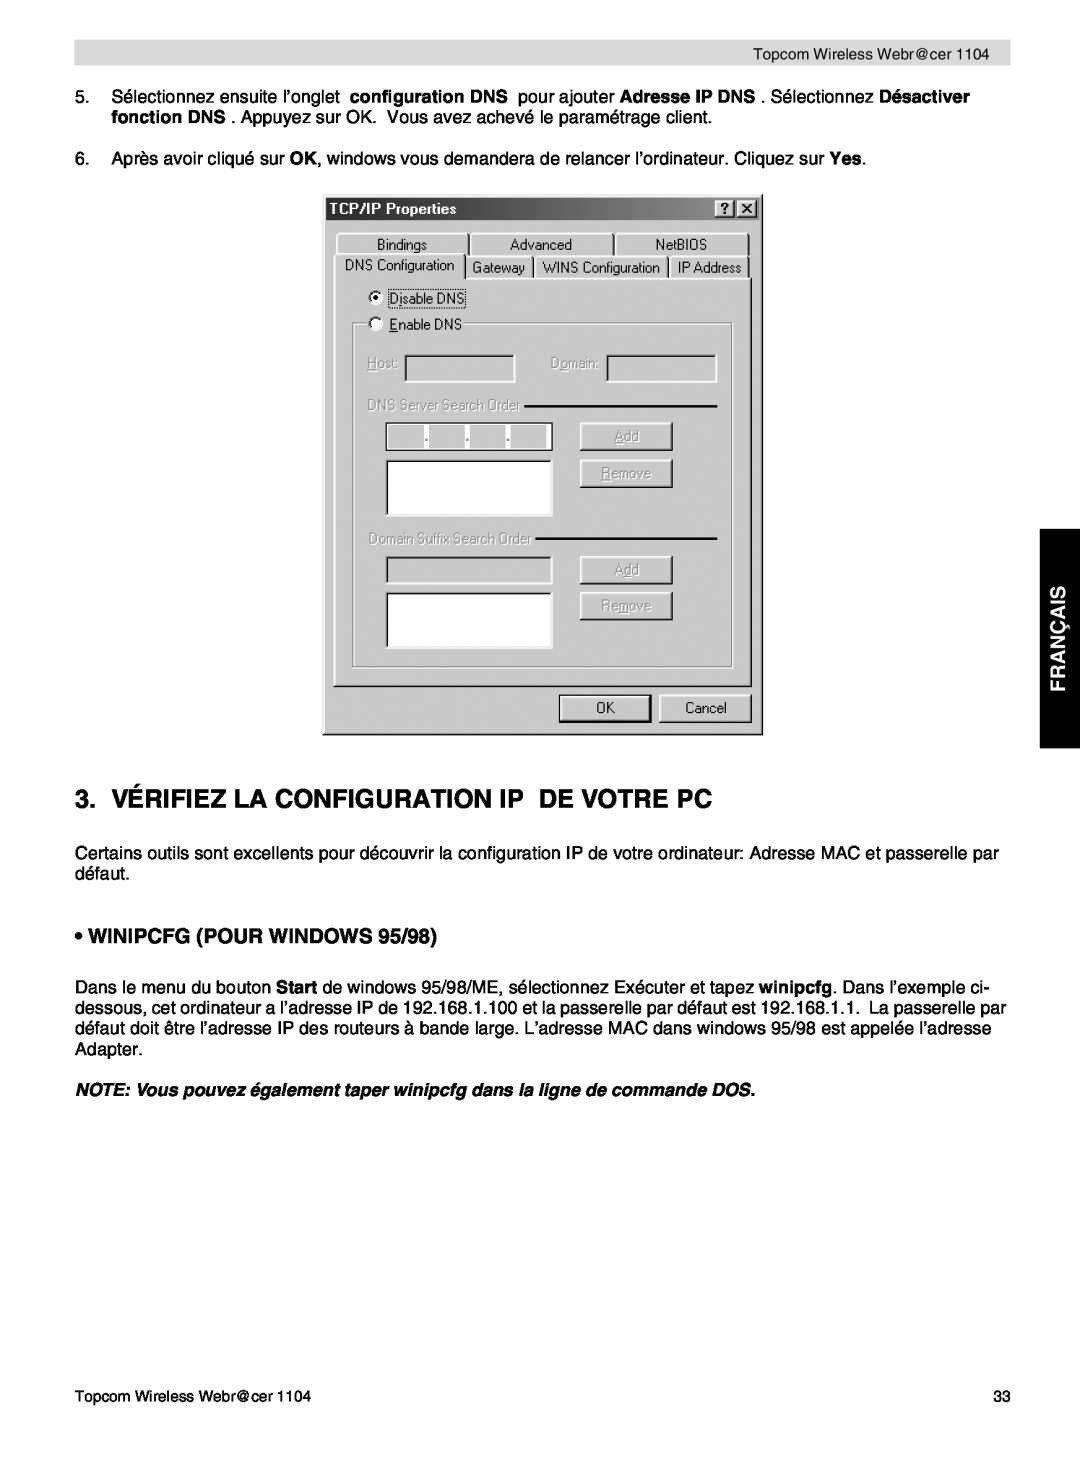 Topcom 1104 manual do utilizador 3. VÉRIFIEZ LA CONFIGURATION IP DE VOTRE PC, Français, WINIPCFG POUR WINDOWS 95/98 